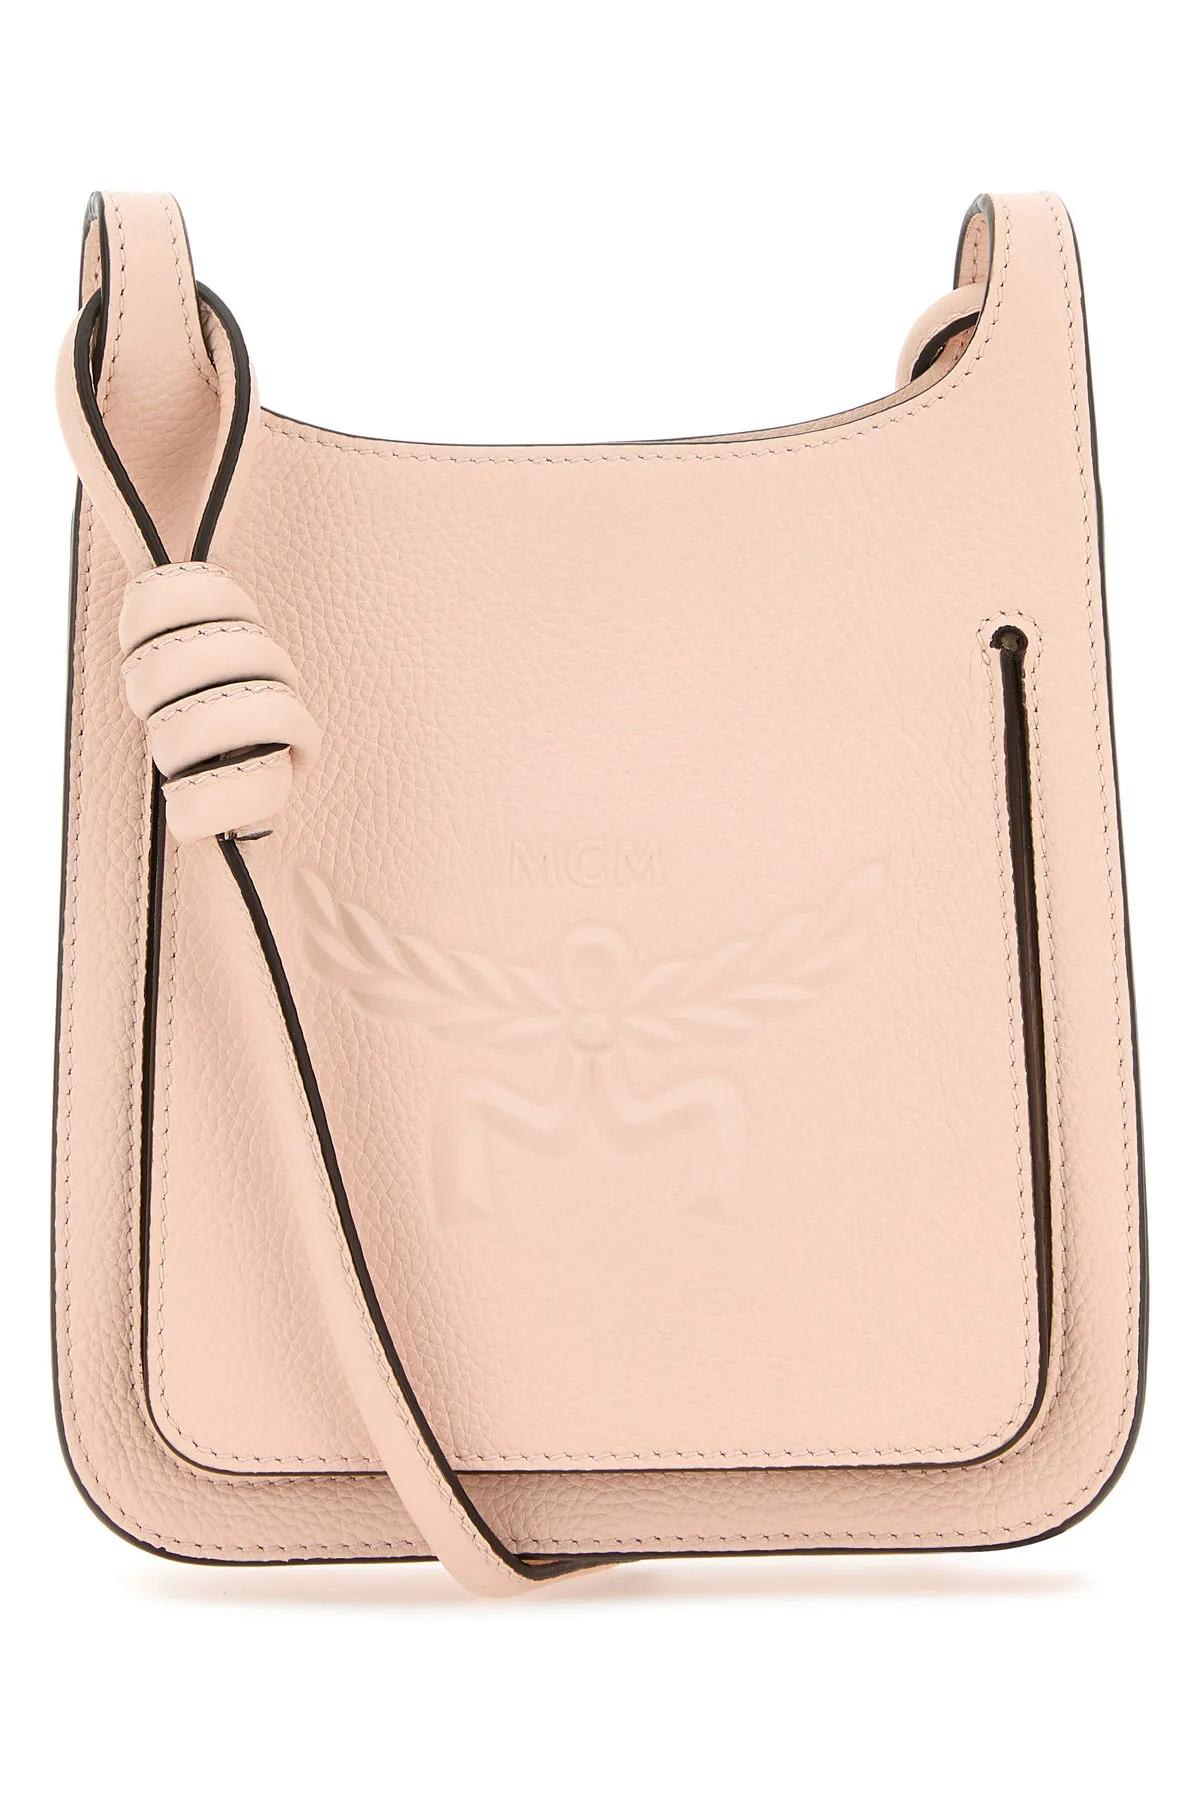 Mcm Pastel Pink Leather Mini Himmel Hobo Crossbody Bag